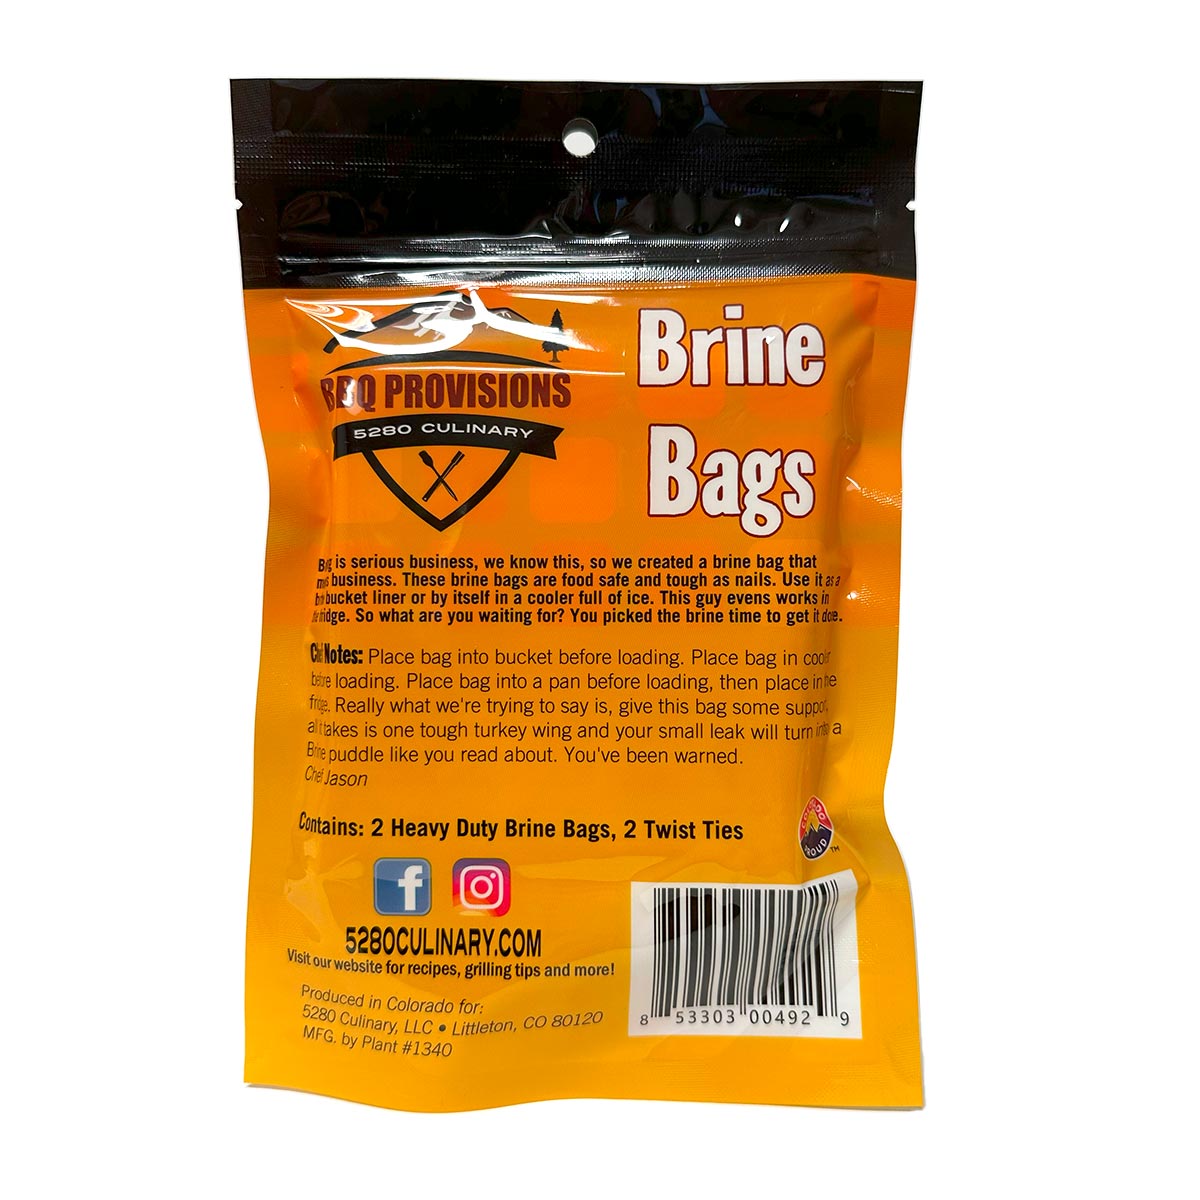 BBQ Provisions Brine Bags (2 pack)